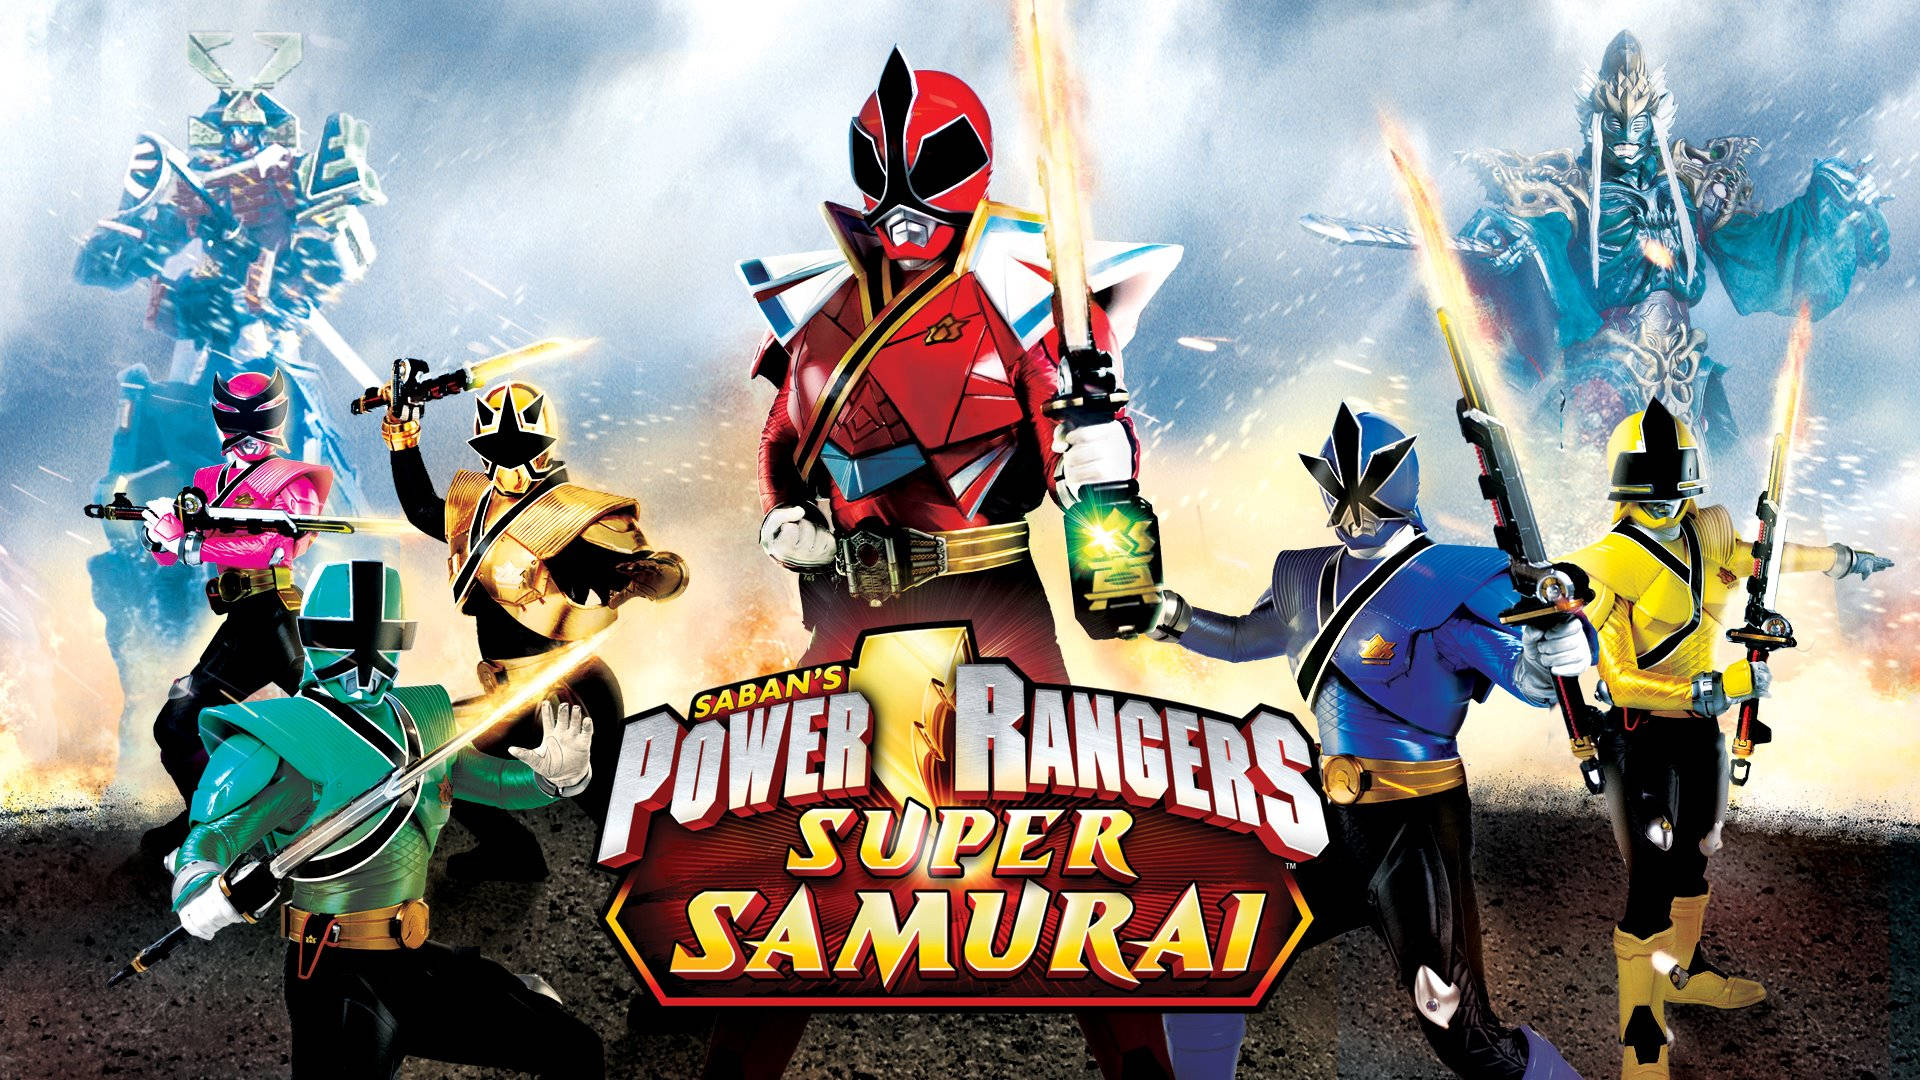 Power Rangers - The Mighty Super Samurai Force